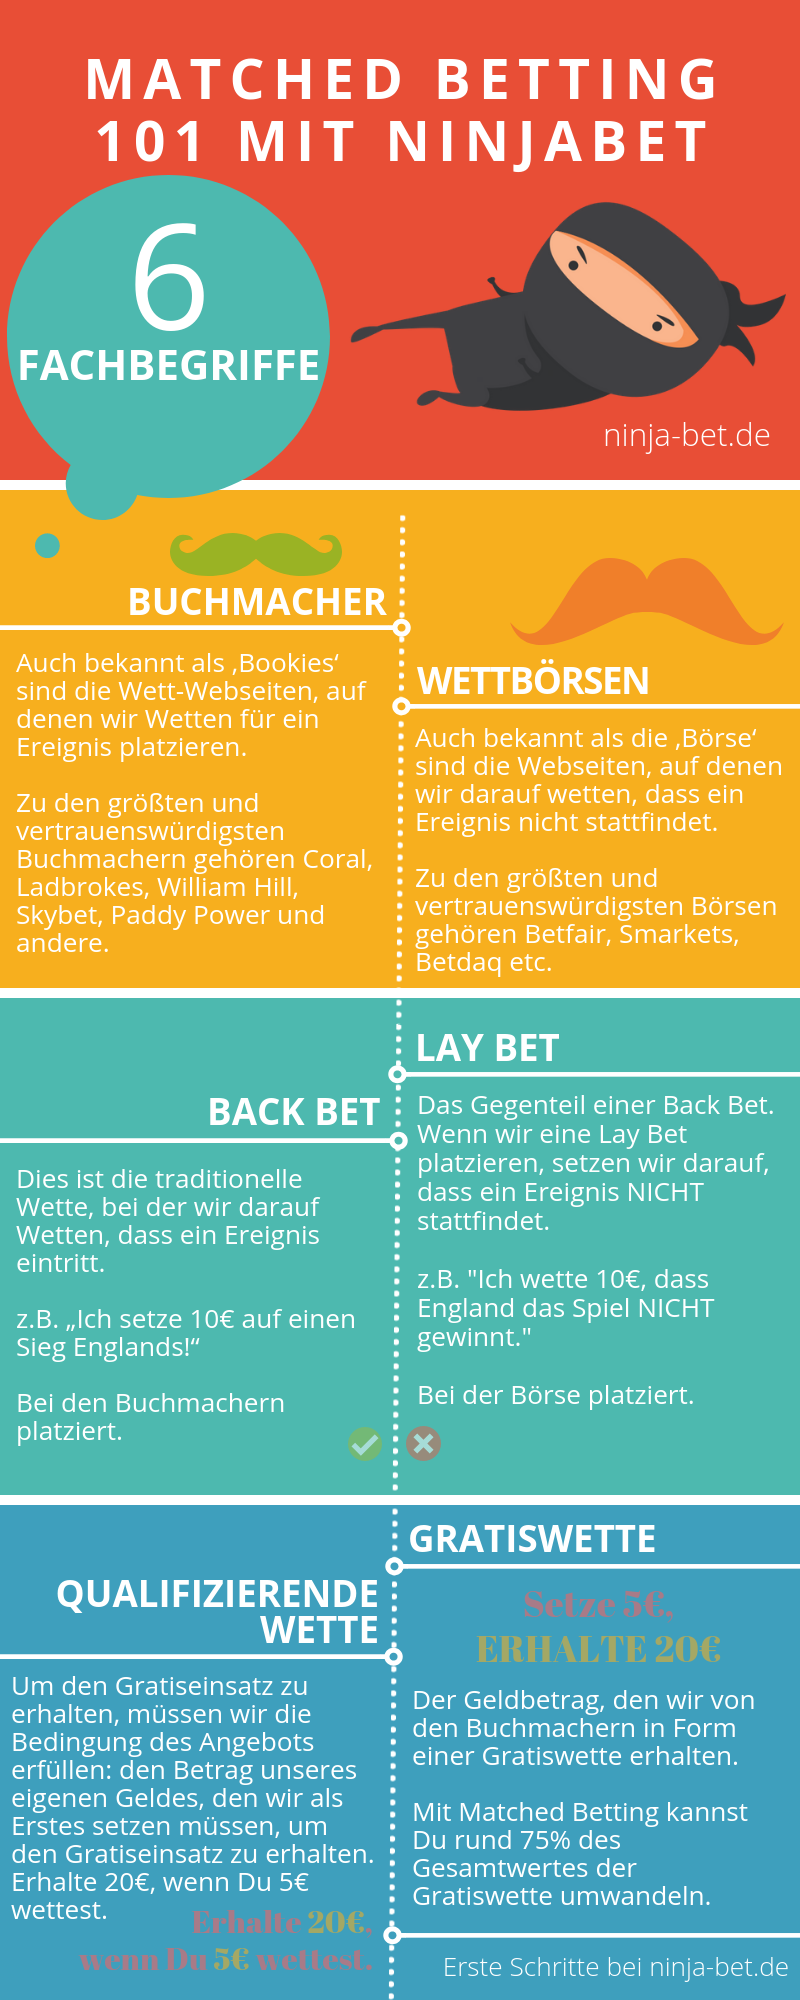 ninjabet-ninjabet.de-german-6 key terms-infogrfik-blog-ninjablog-matched betting-BUCHMACHER-WETTBÖRSEN-GRATISWETTE-germany